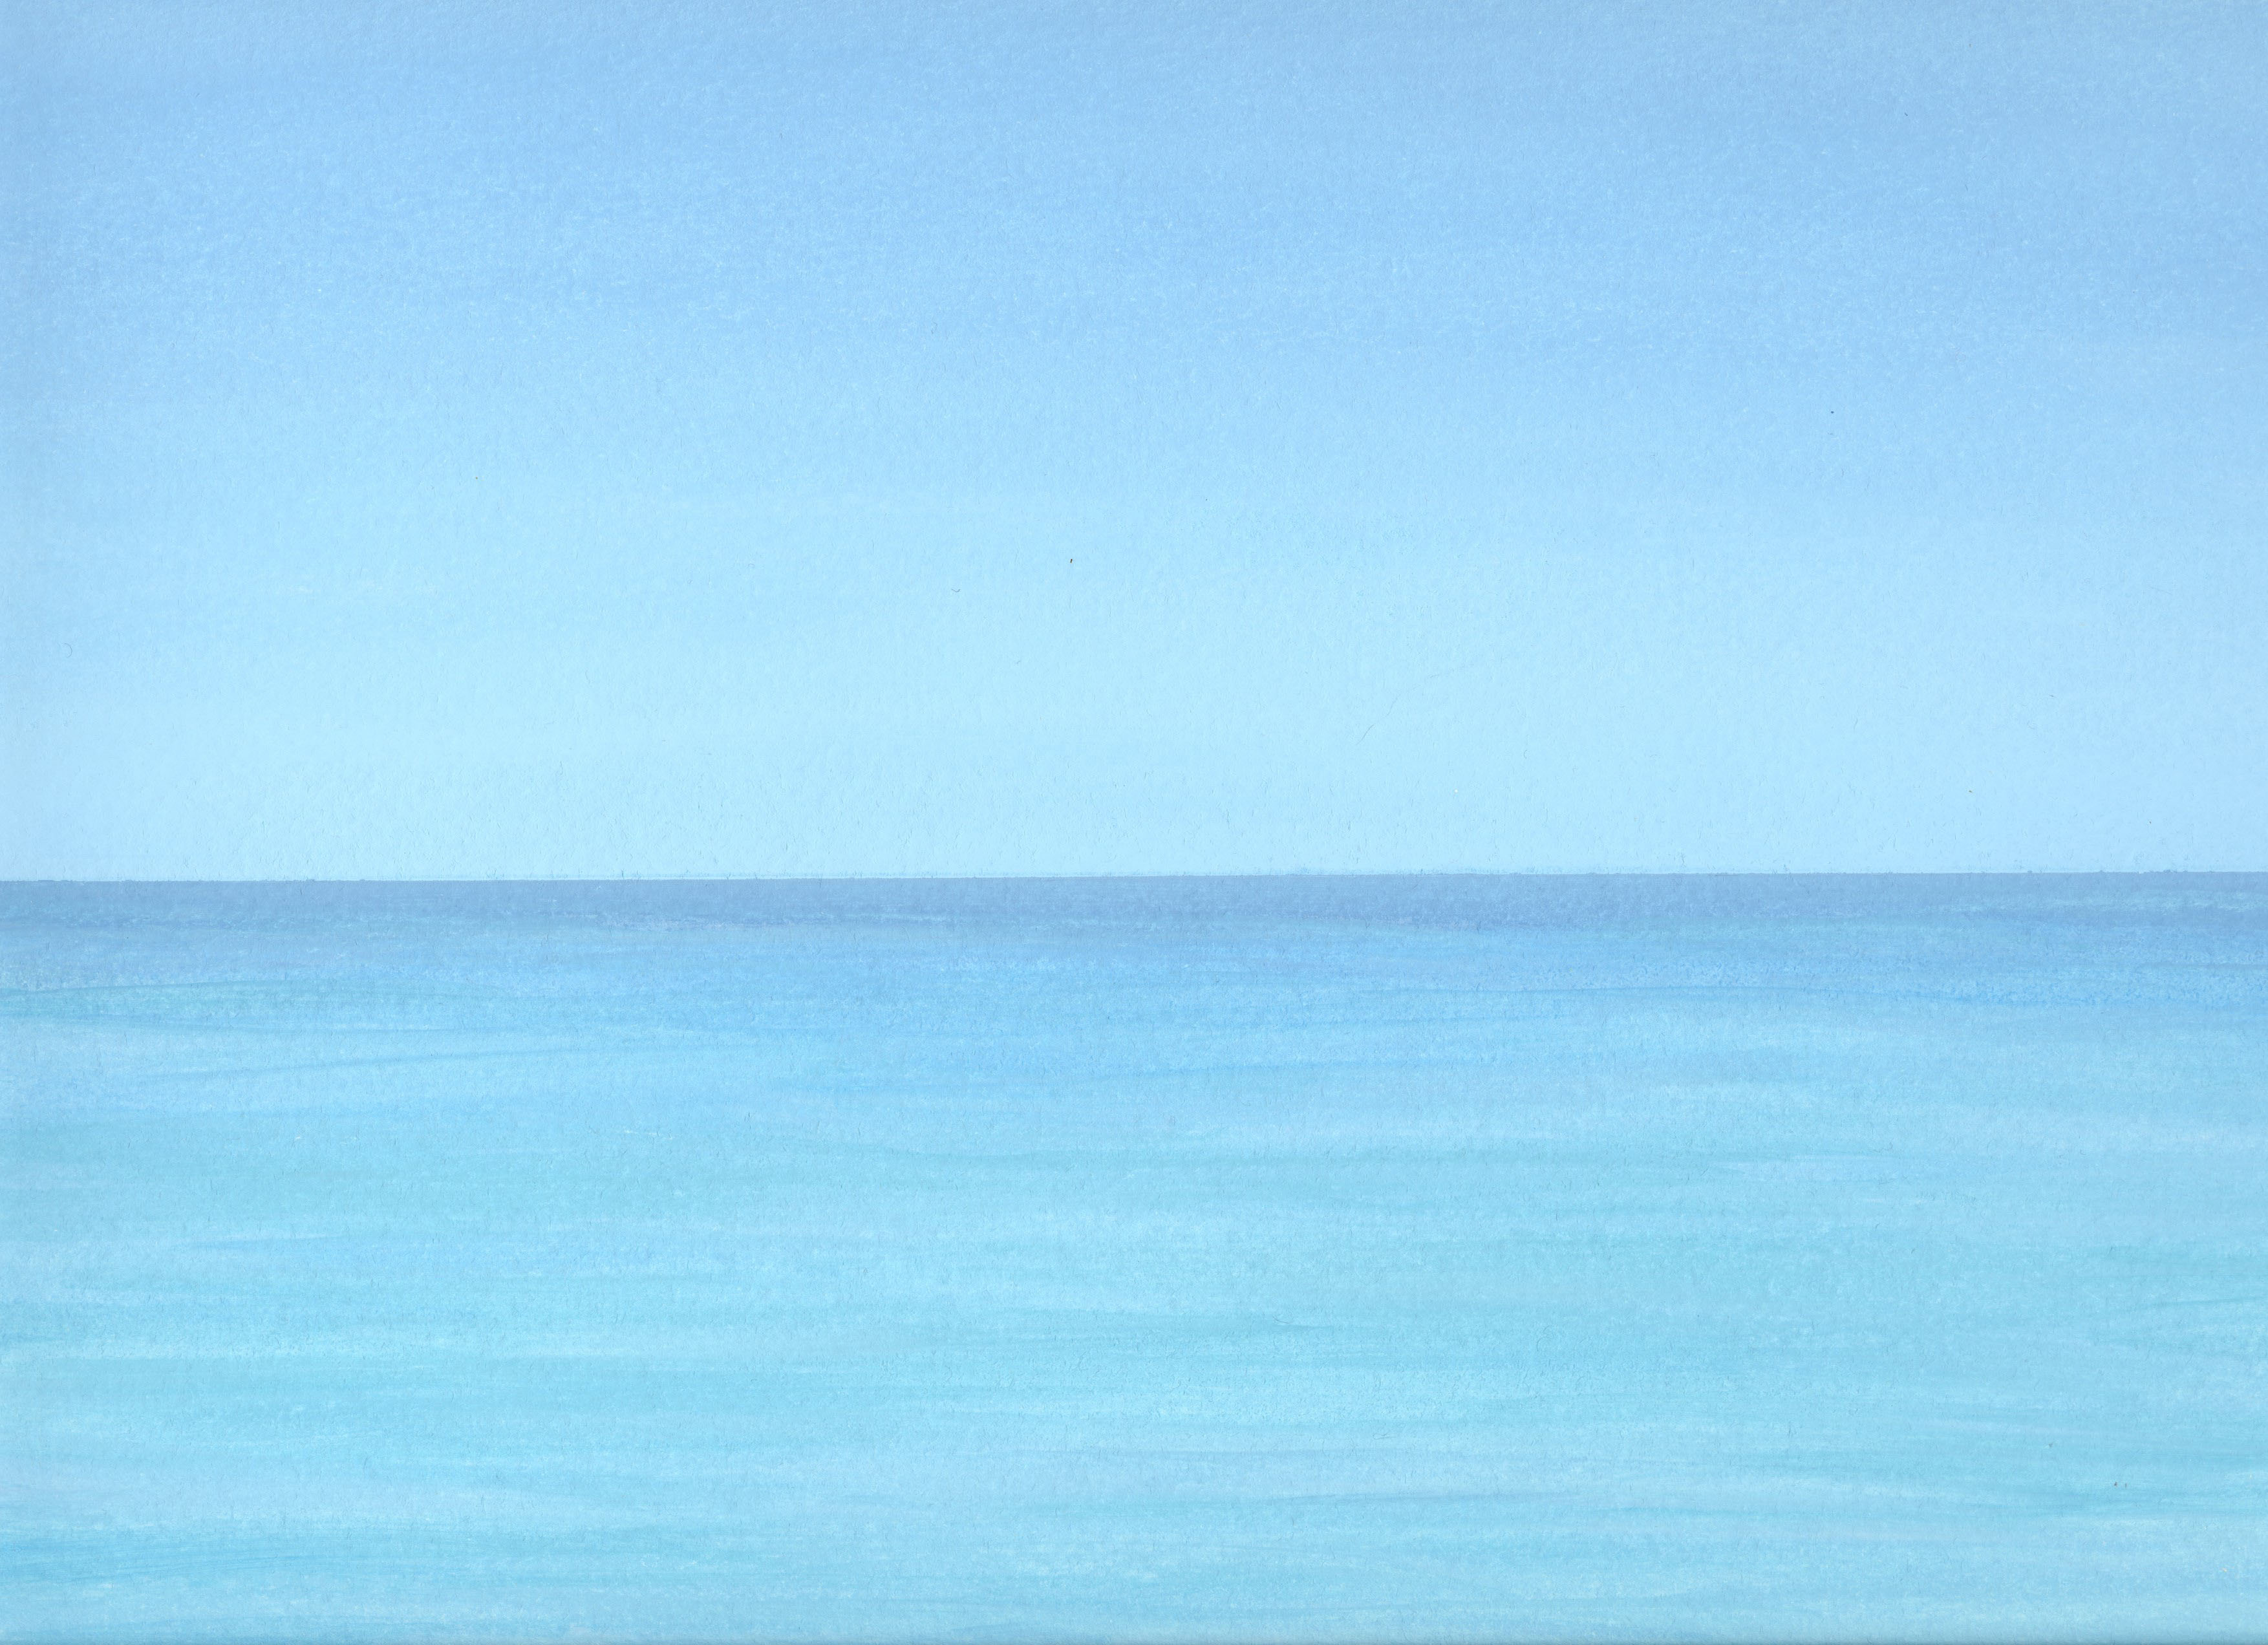 Seestück / Seascape 123, 2014, 36 x 43 cm, Mischtechnik auf Papier / Mixed media on paper